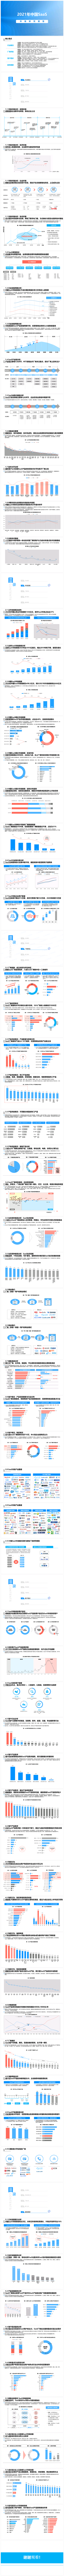 2021中国SaaS市场研究报告20210830_155821.png